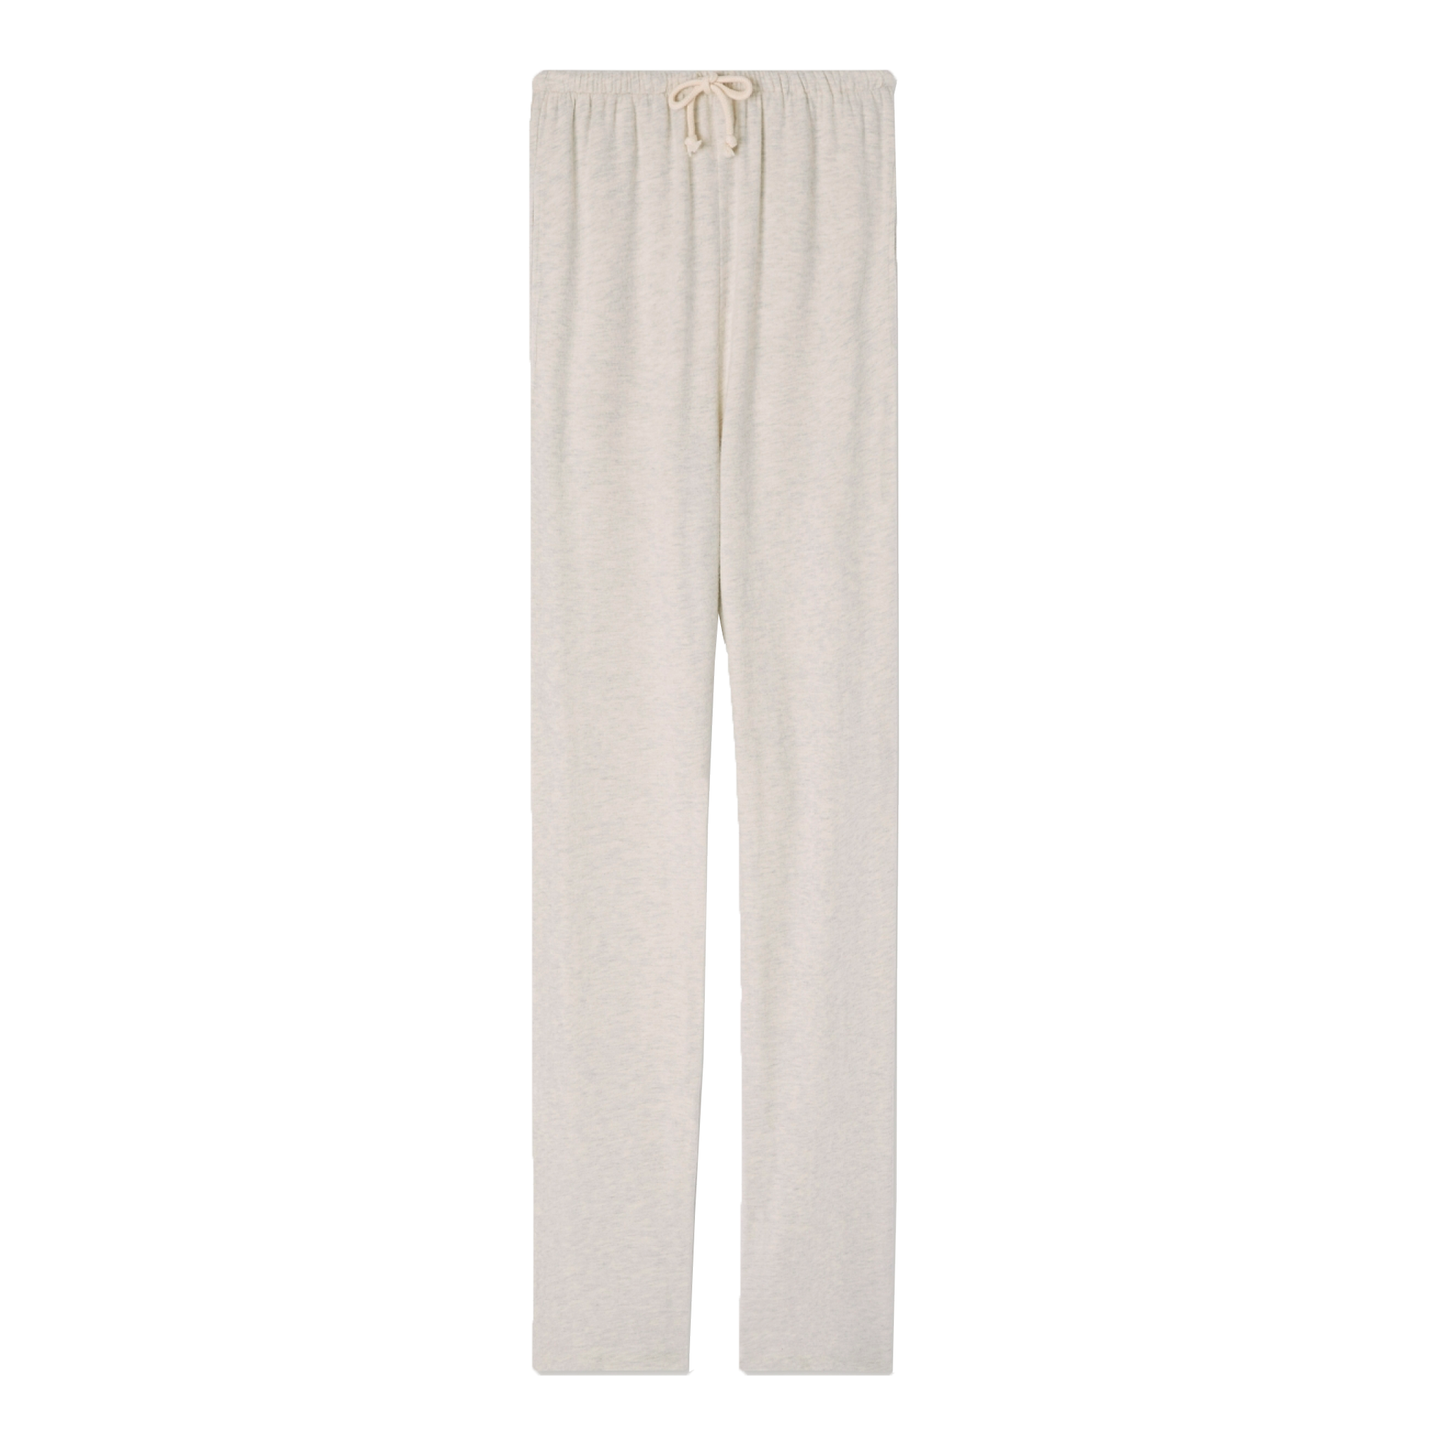 Ypawood Pants, Light Grey